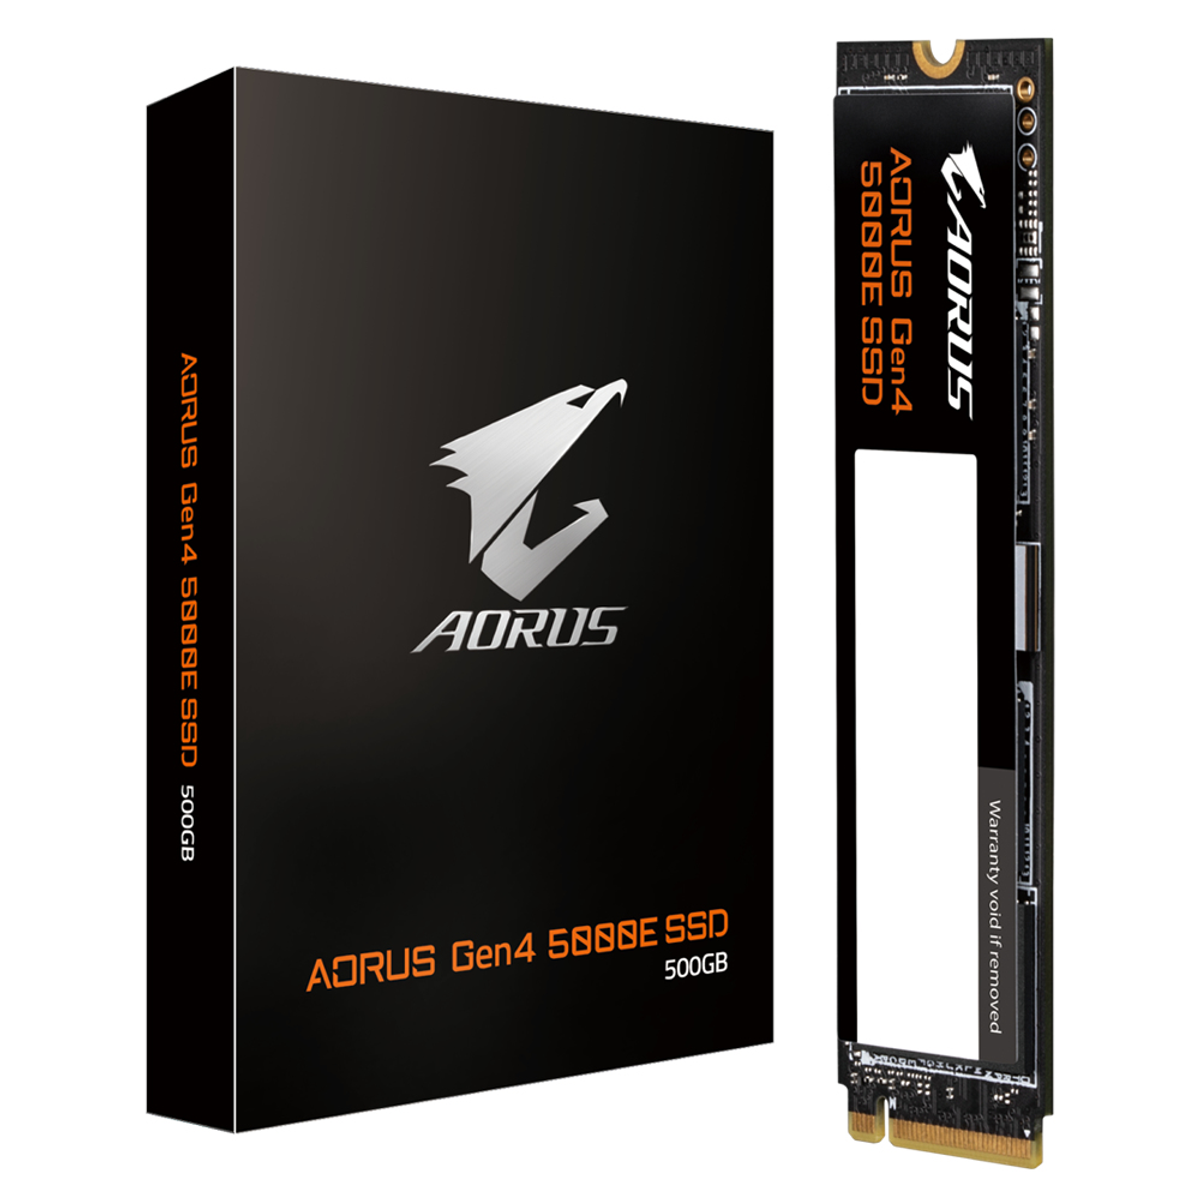 GIGABYTE AORUS Gen4 5000E, 500 GB, SSD, 2,5 intern Zoll